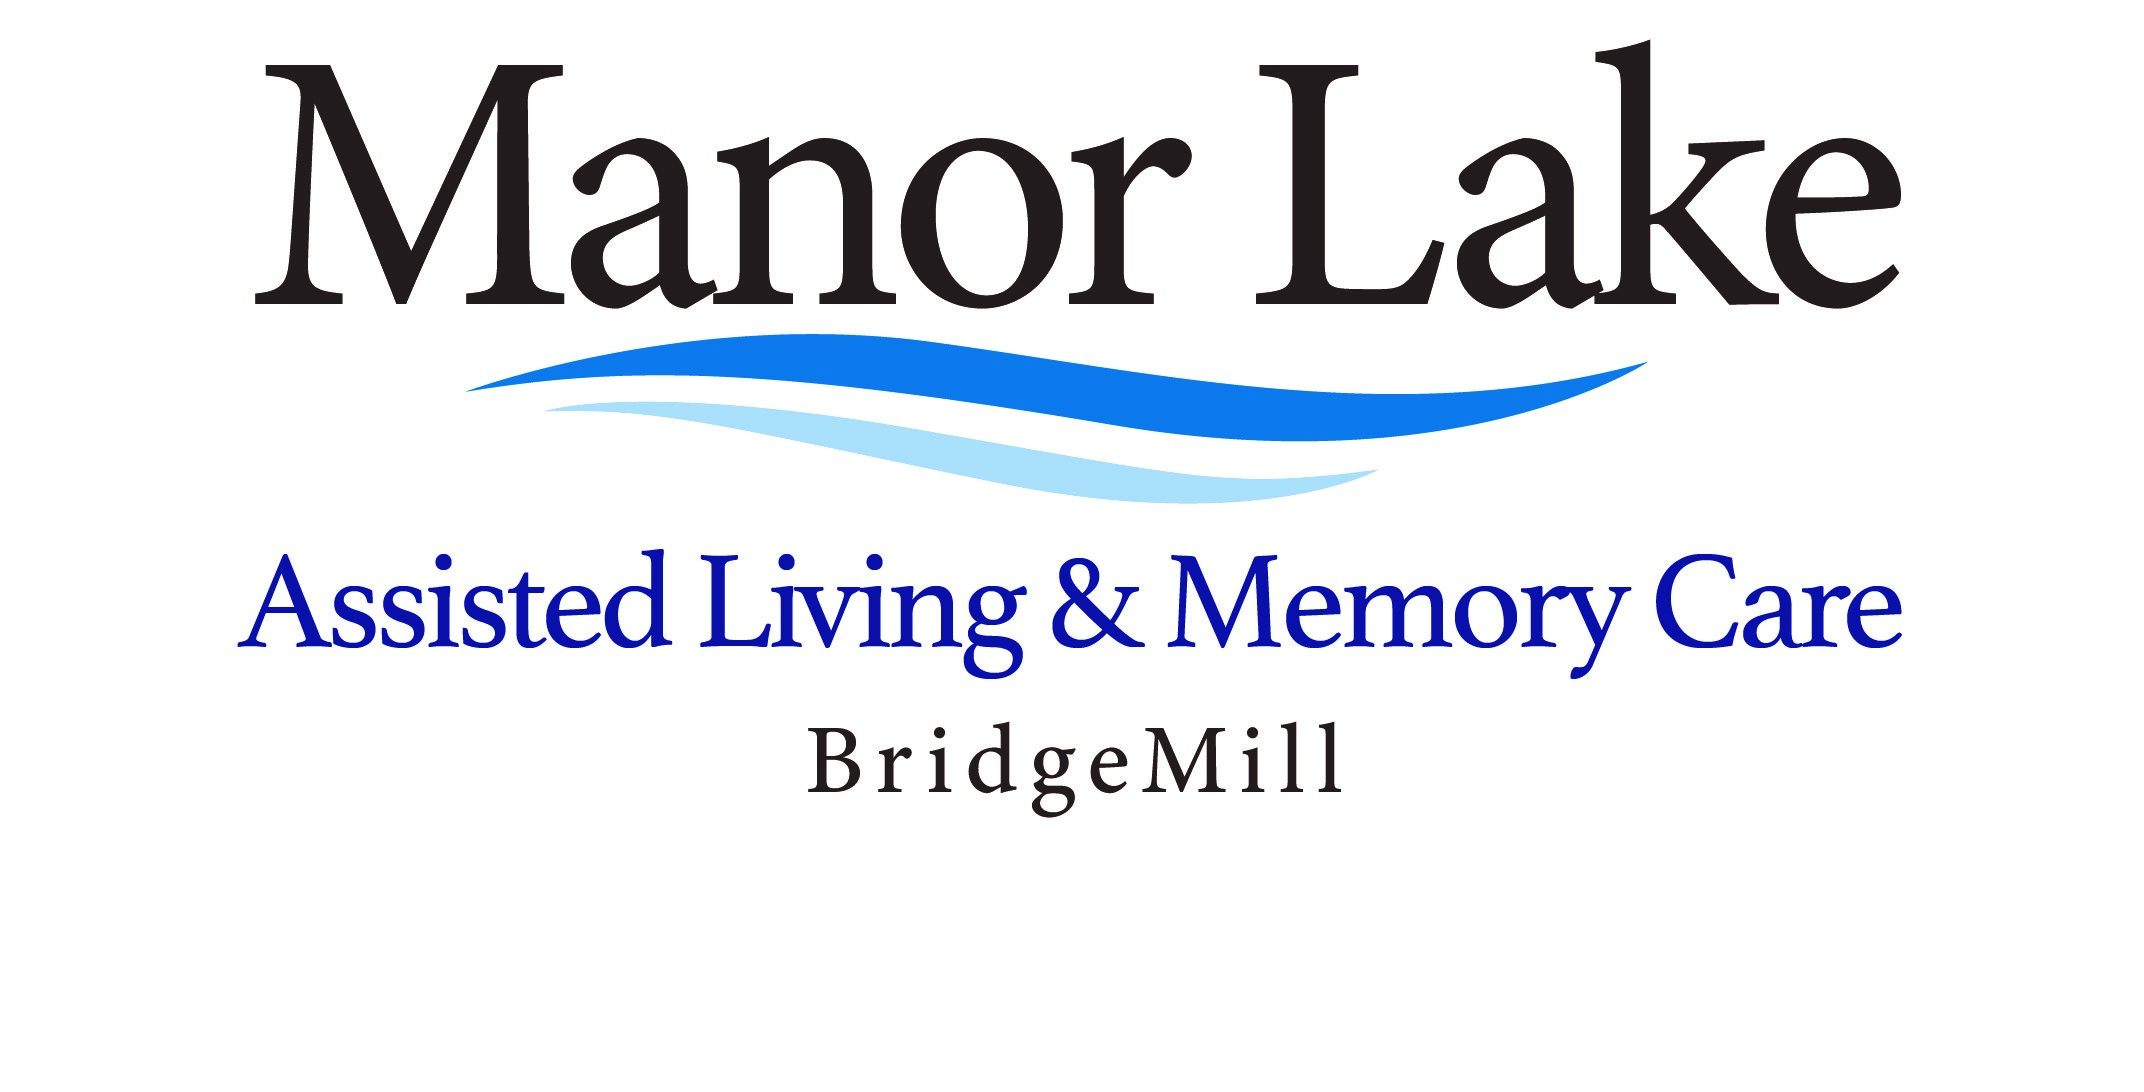 Manor Lake BridgeMill Assisted Living & Memory Care